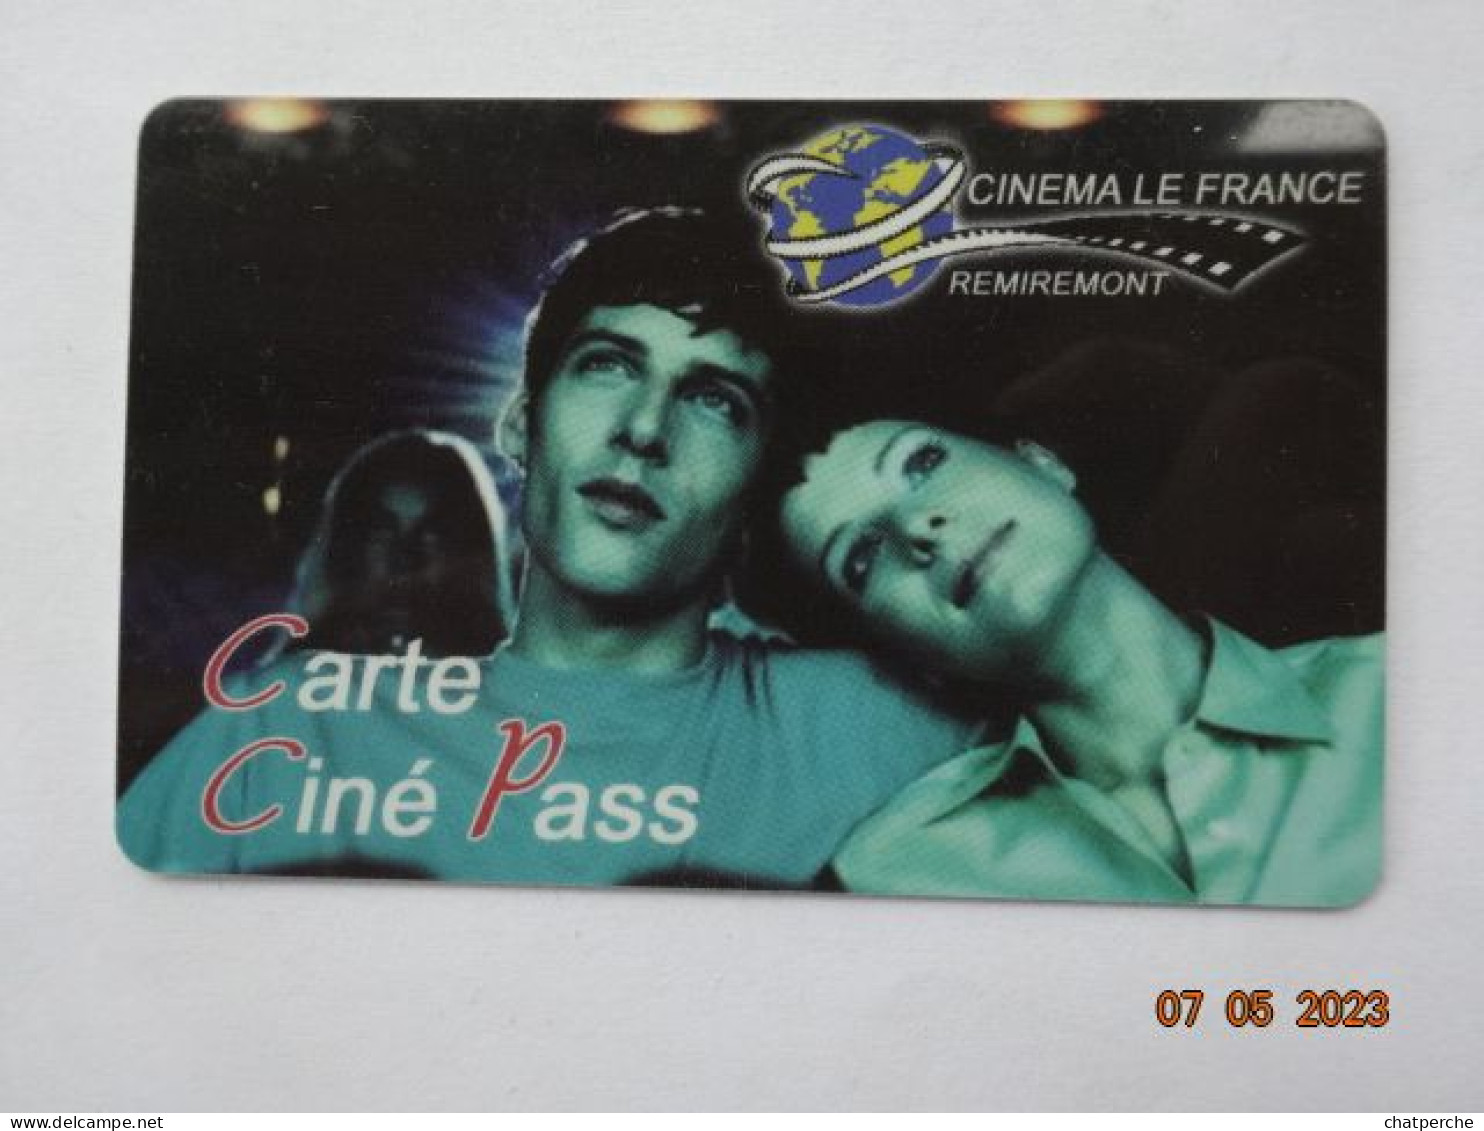 CINECARTE CARTE CINEMA CINE CARD BANDE MAGNETIQUE  CINEMA LE FRANCE REMIREMONT 88 VOSGES  CINE PASS - Movie Cards